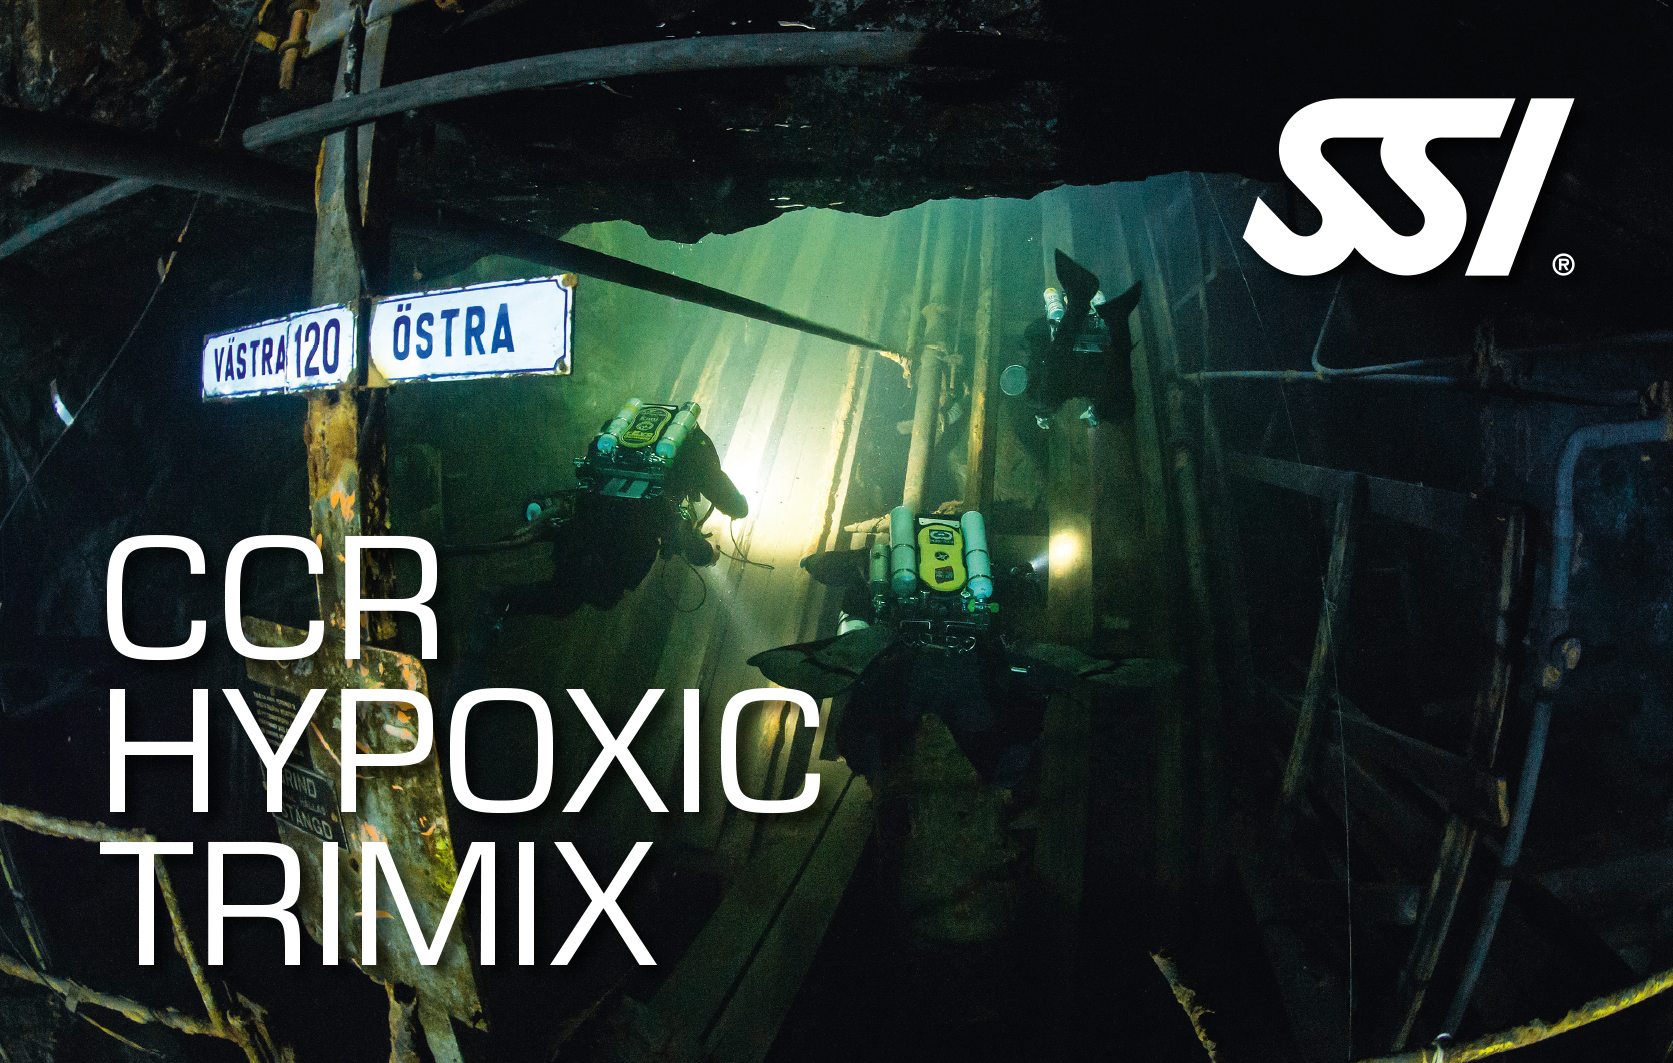 SSI CCR Hypoxic Trimix Course | SSI CCR Hypoxic Trimix | CCR Hypoxic Trimix | Diving Course